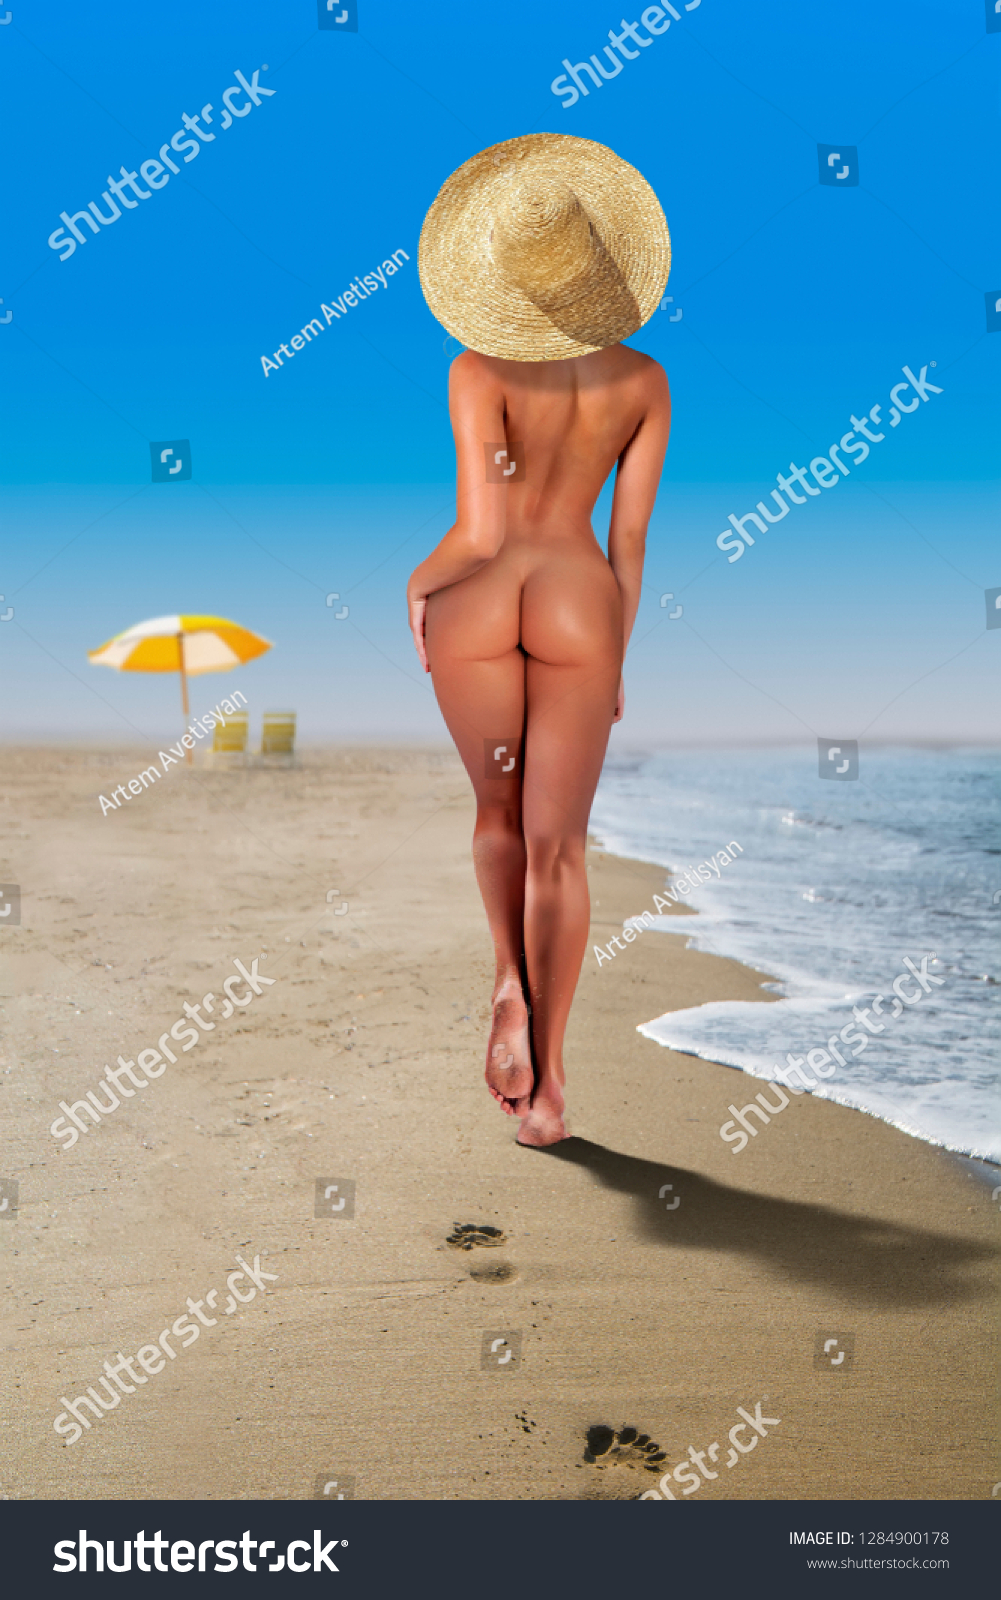 danielle dieckman recommends female nude beach pics pic